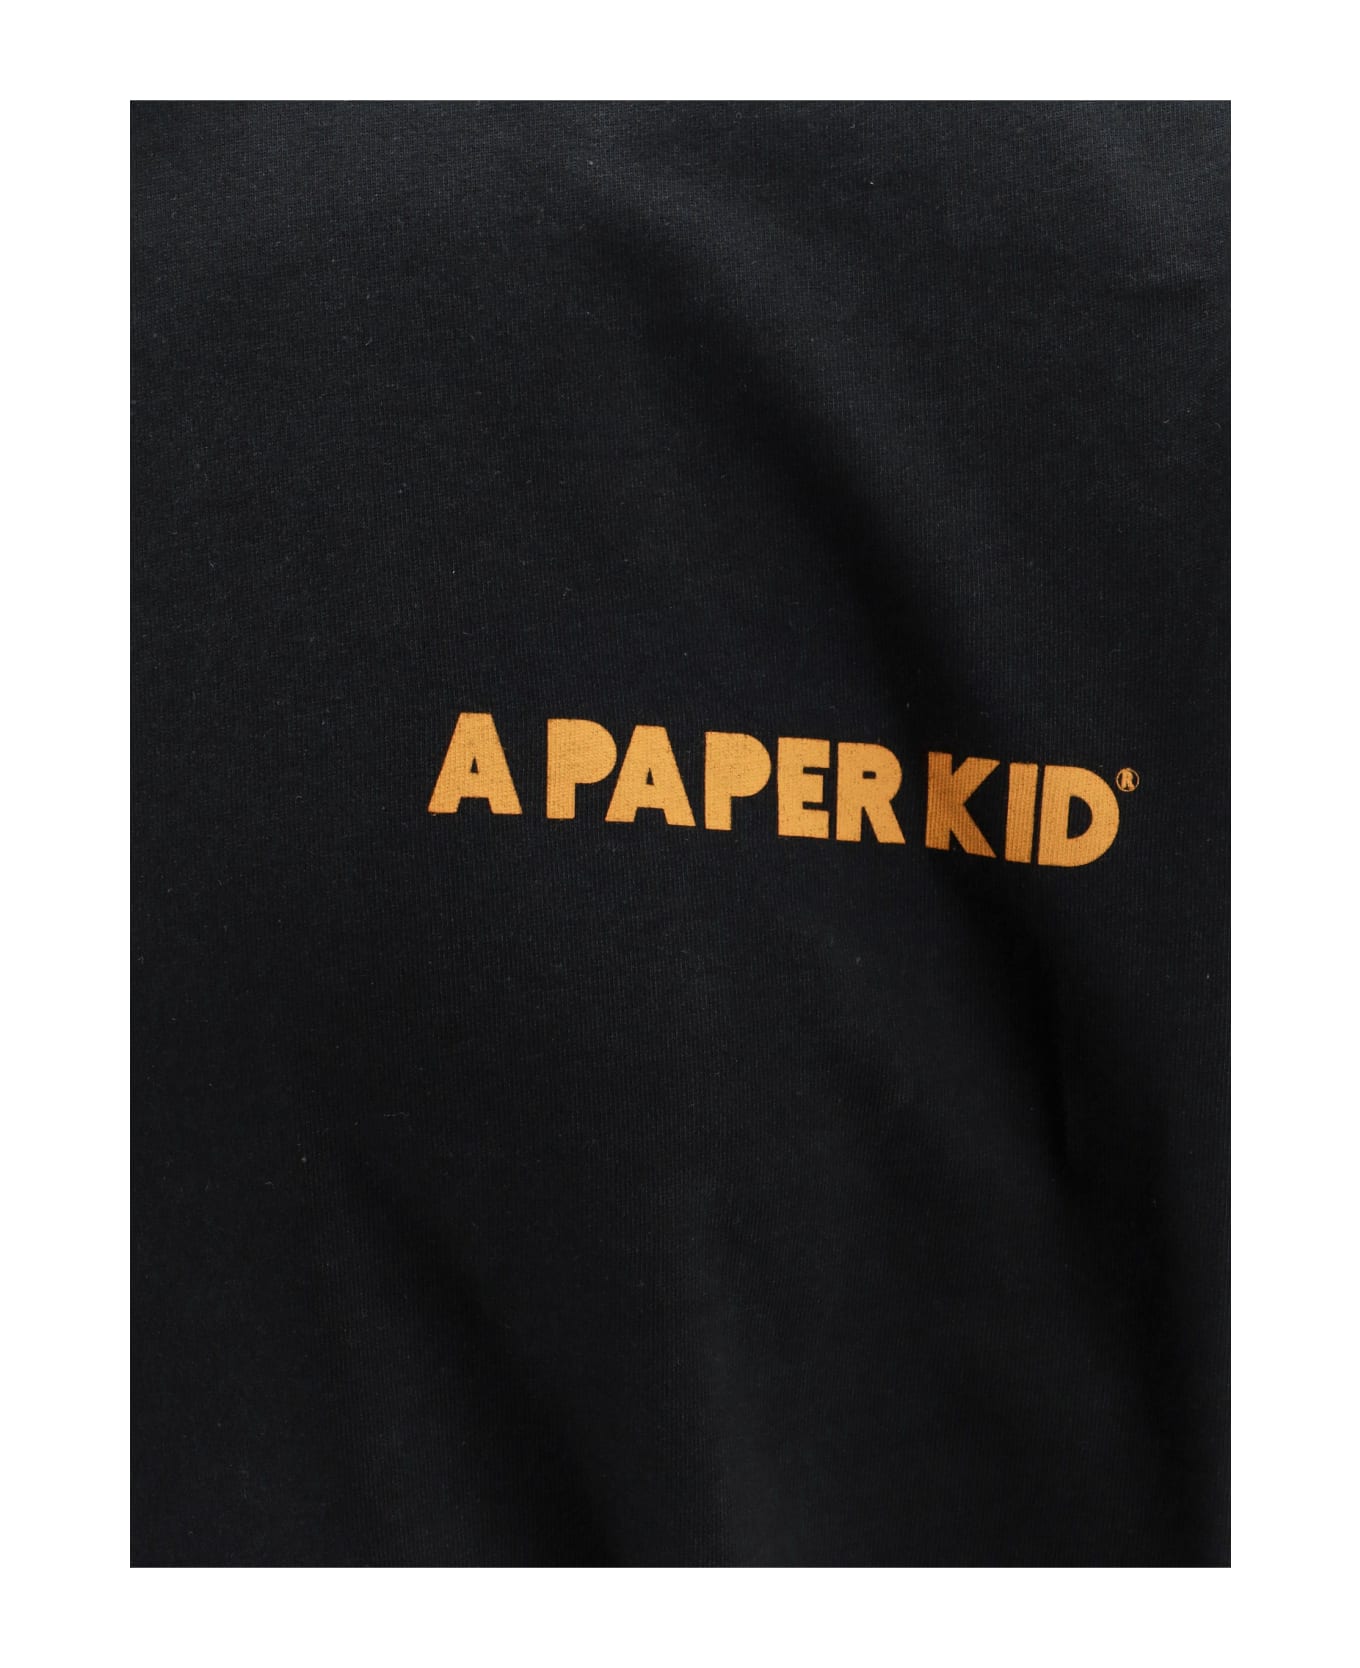 A Paper Kid T-shirt - Black